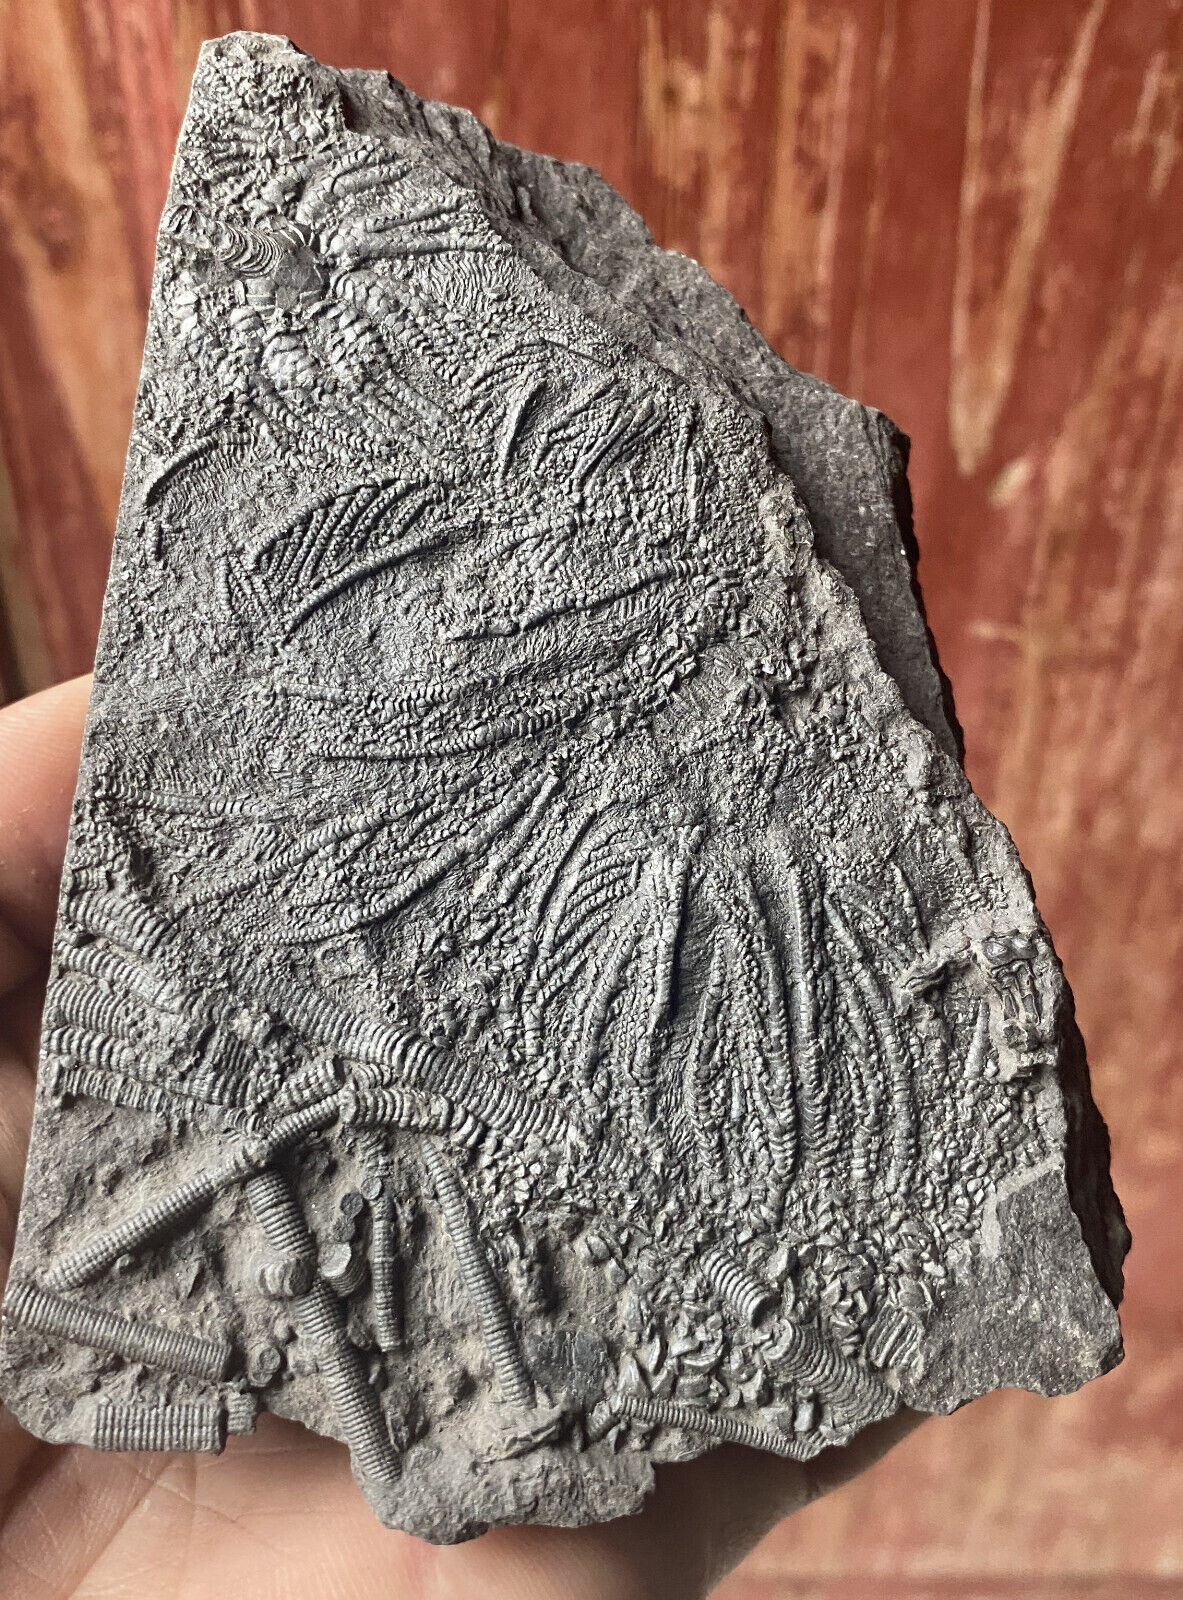 Natural Devonian prehistoric Jurassic biota crinoids Fossils